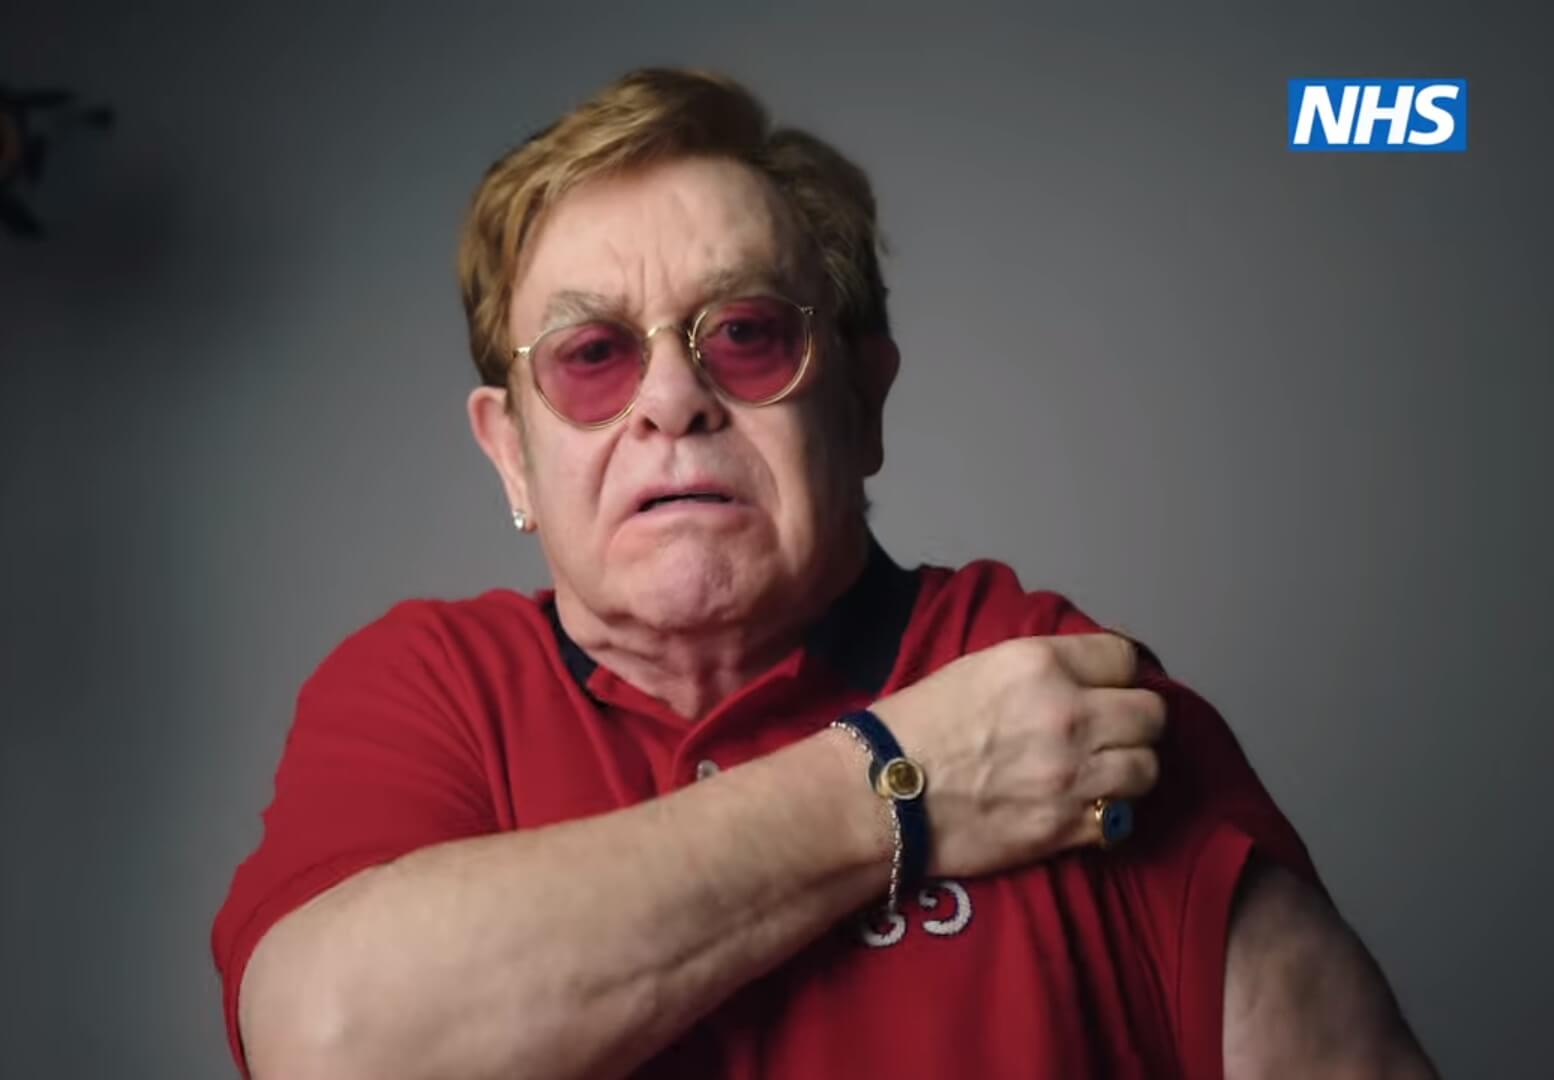 Elton John testimonial pro-vax: “Vacciniamoci contro questa miserabile malattia”